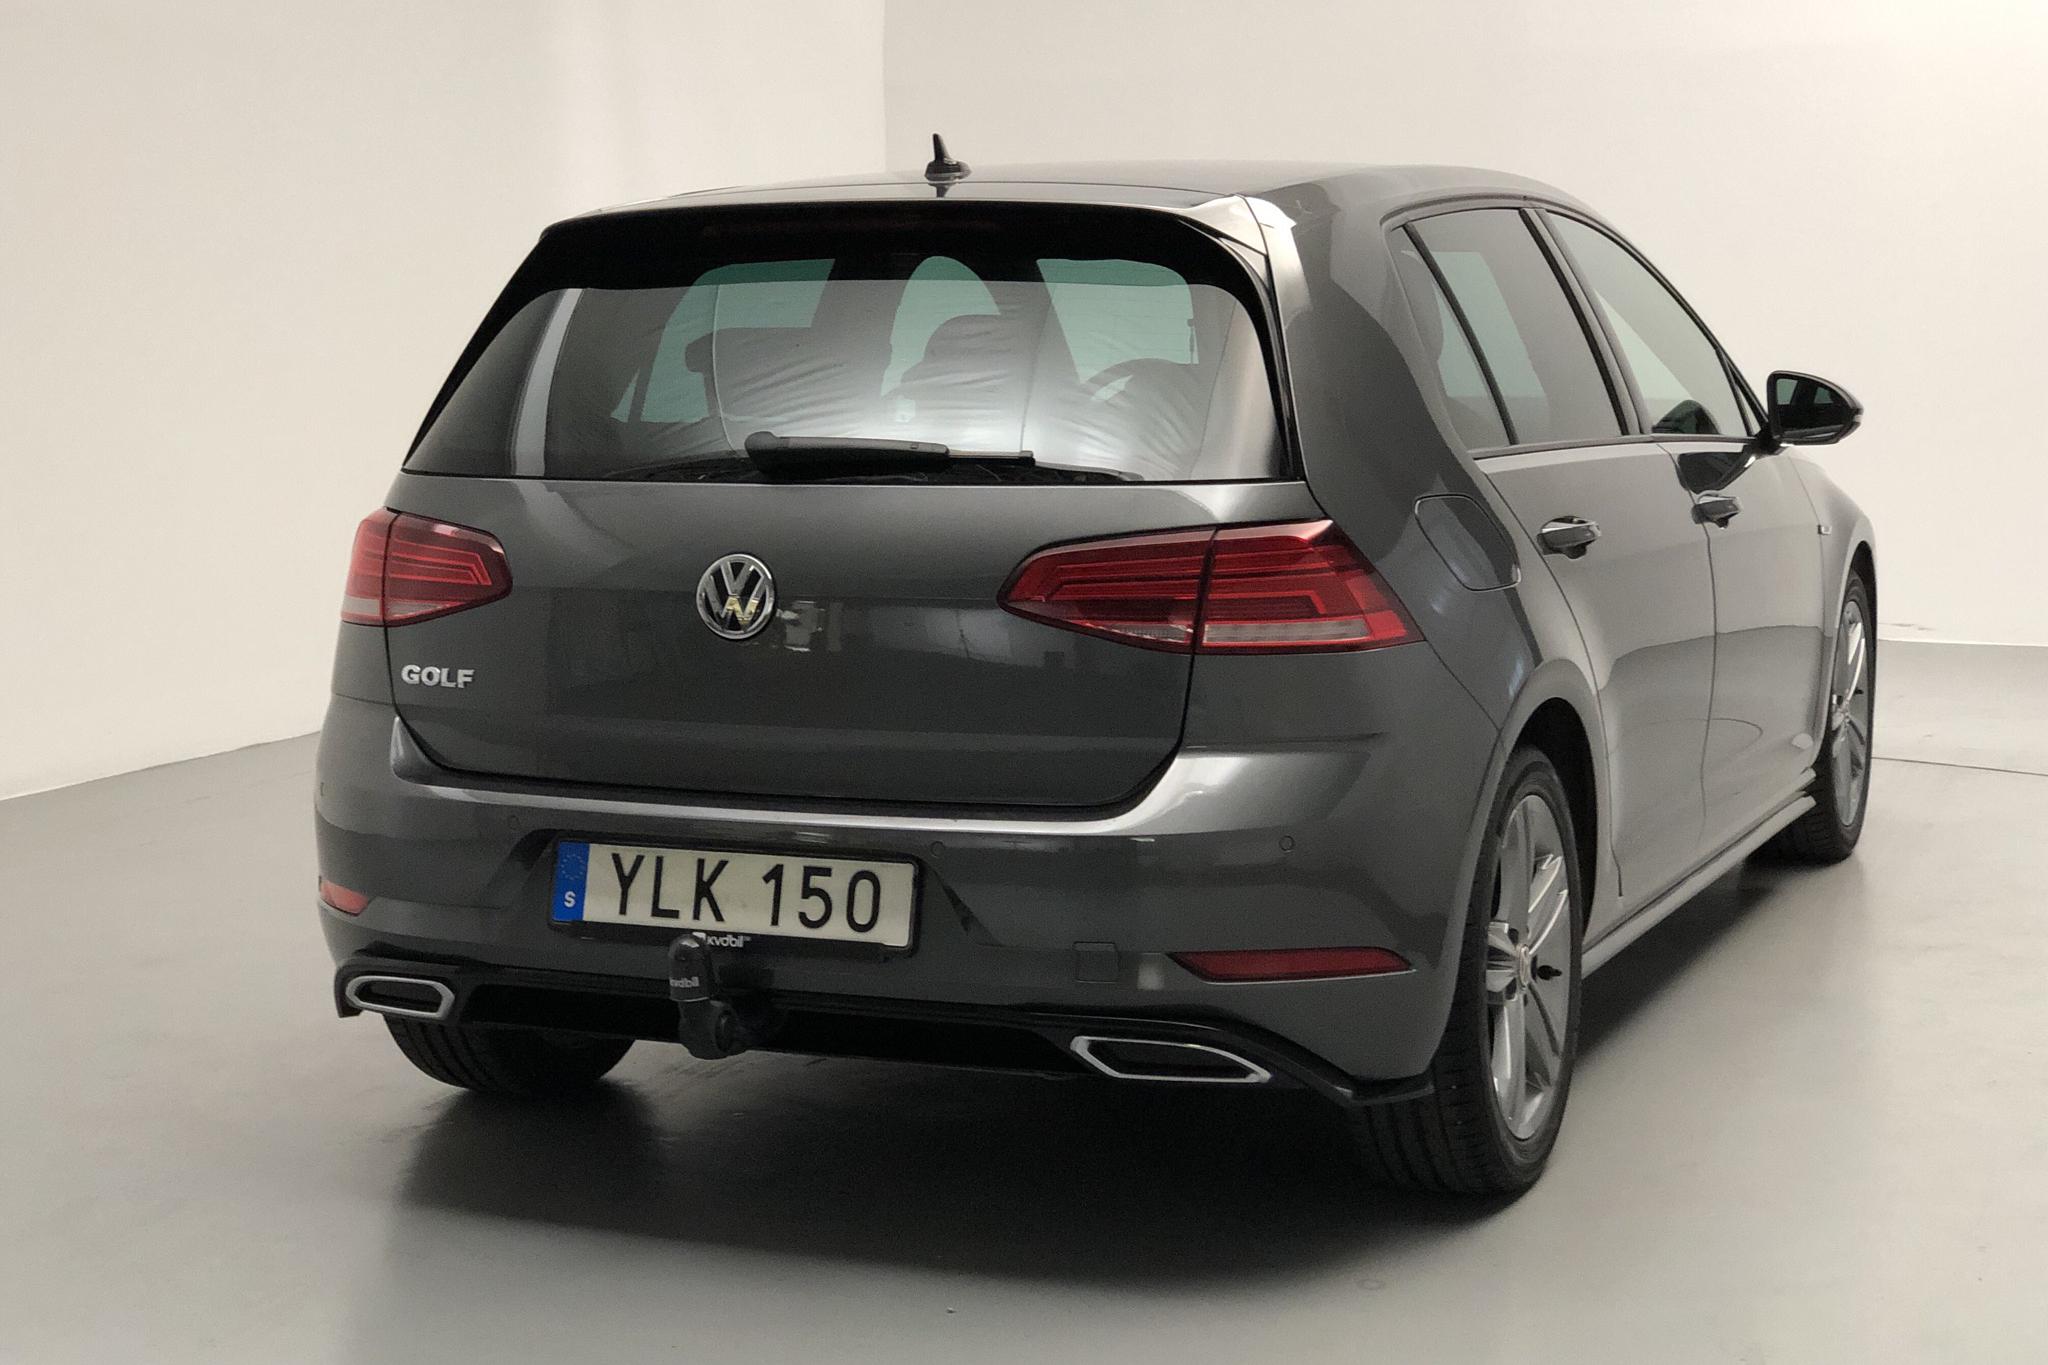 VW Golf VII 1.4 TSI 5dr (150hk) - 39 310 km - Automatic - Dark Grey - 2018